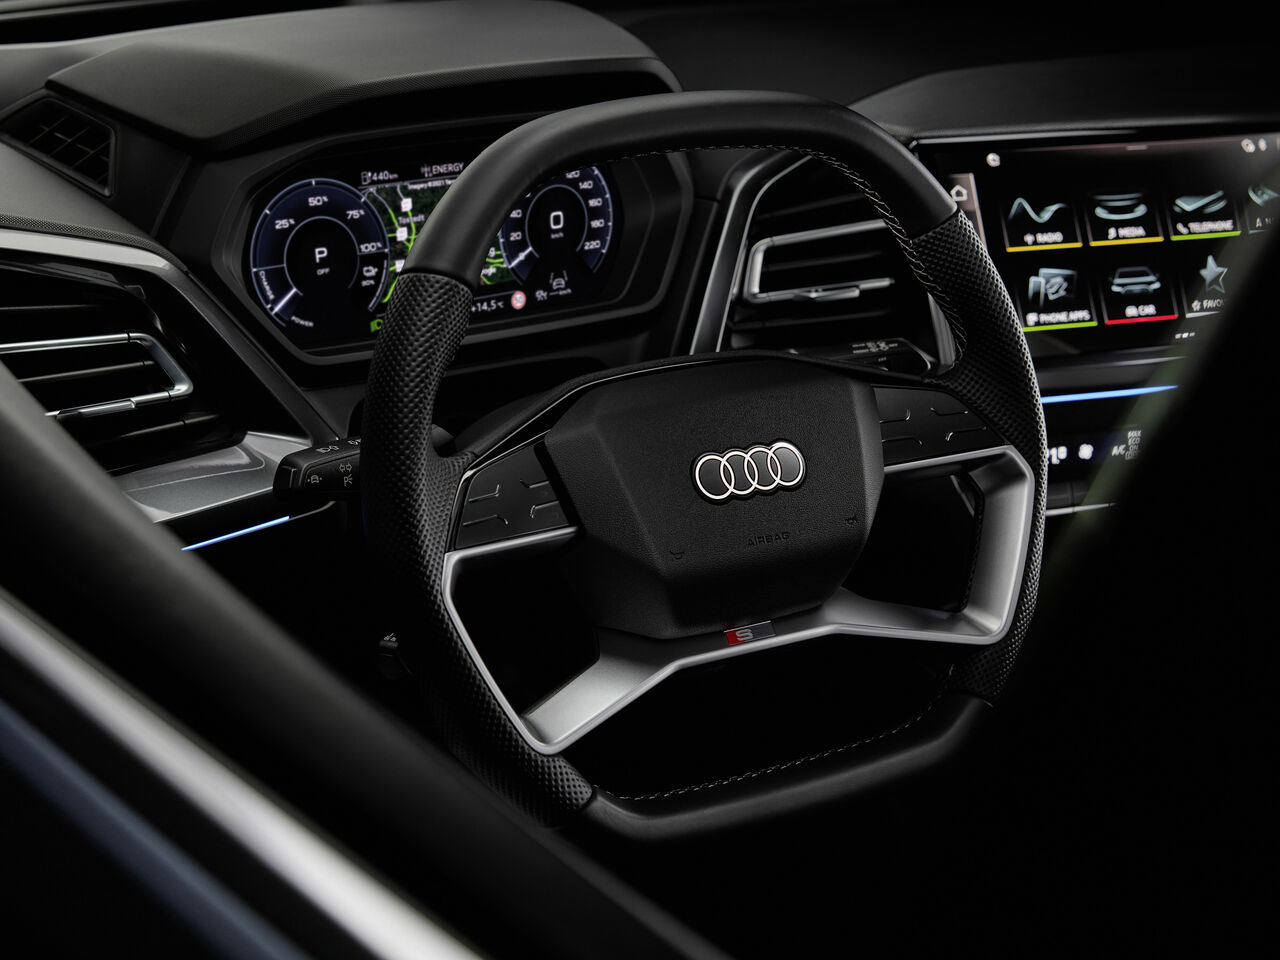 Behind the scenes: The development of the Audi steering wheel